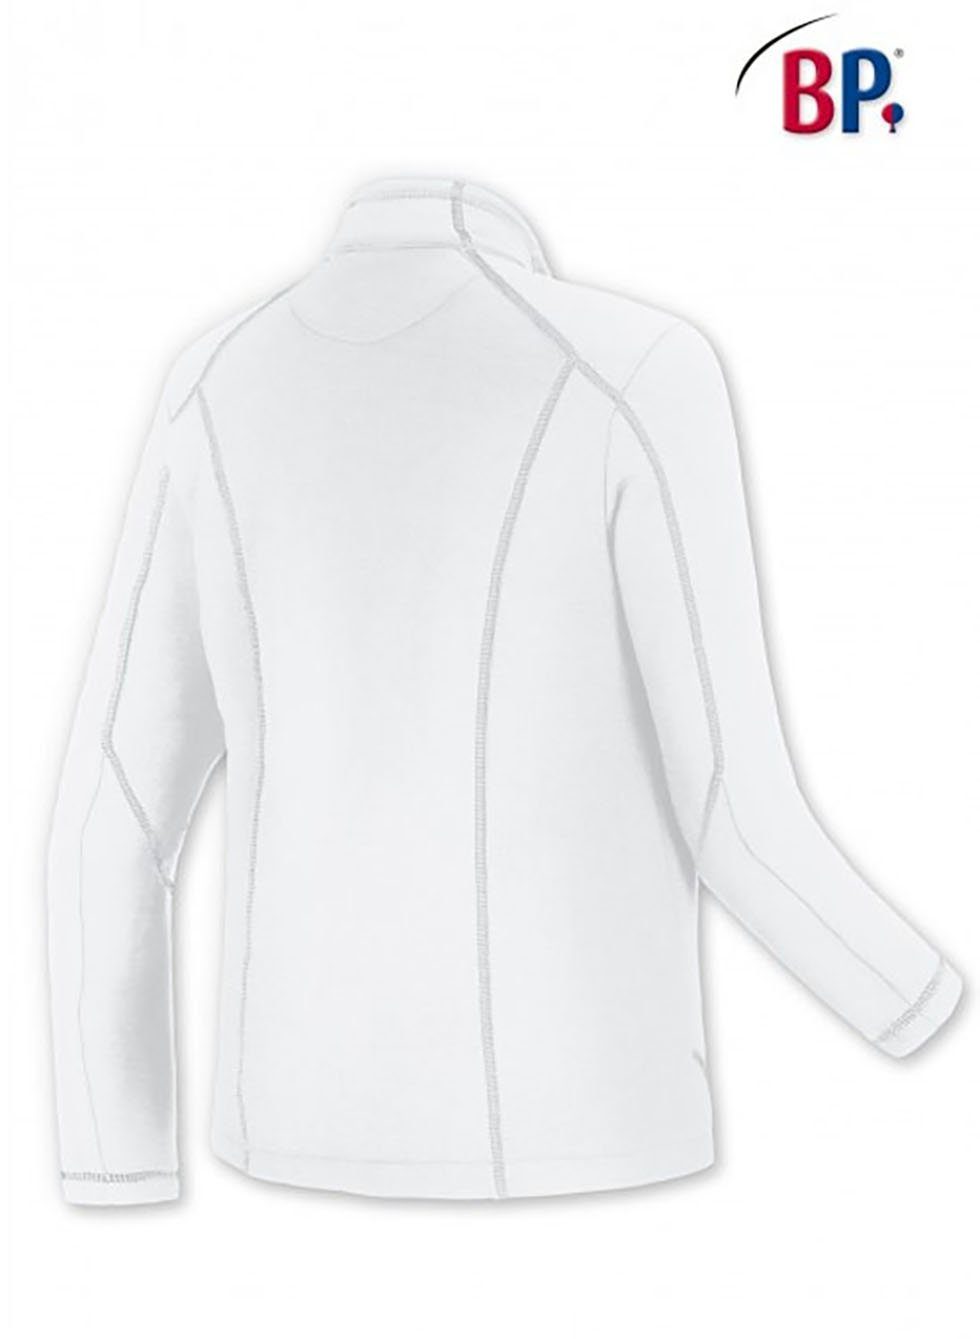 bp Arbeitsjacke Arbeitsjacke Fleece Jacke Langarm Herren Sweatshirt 1745-679-21 weiß Übergangsjacke Workwear